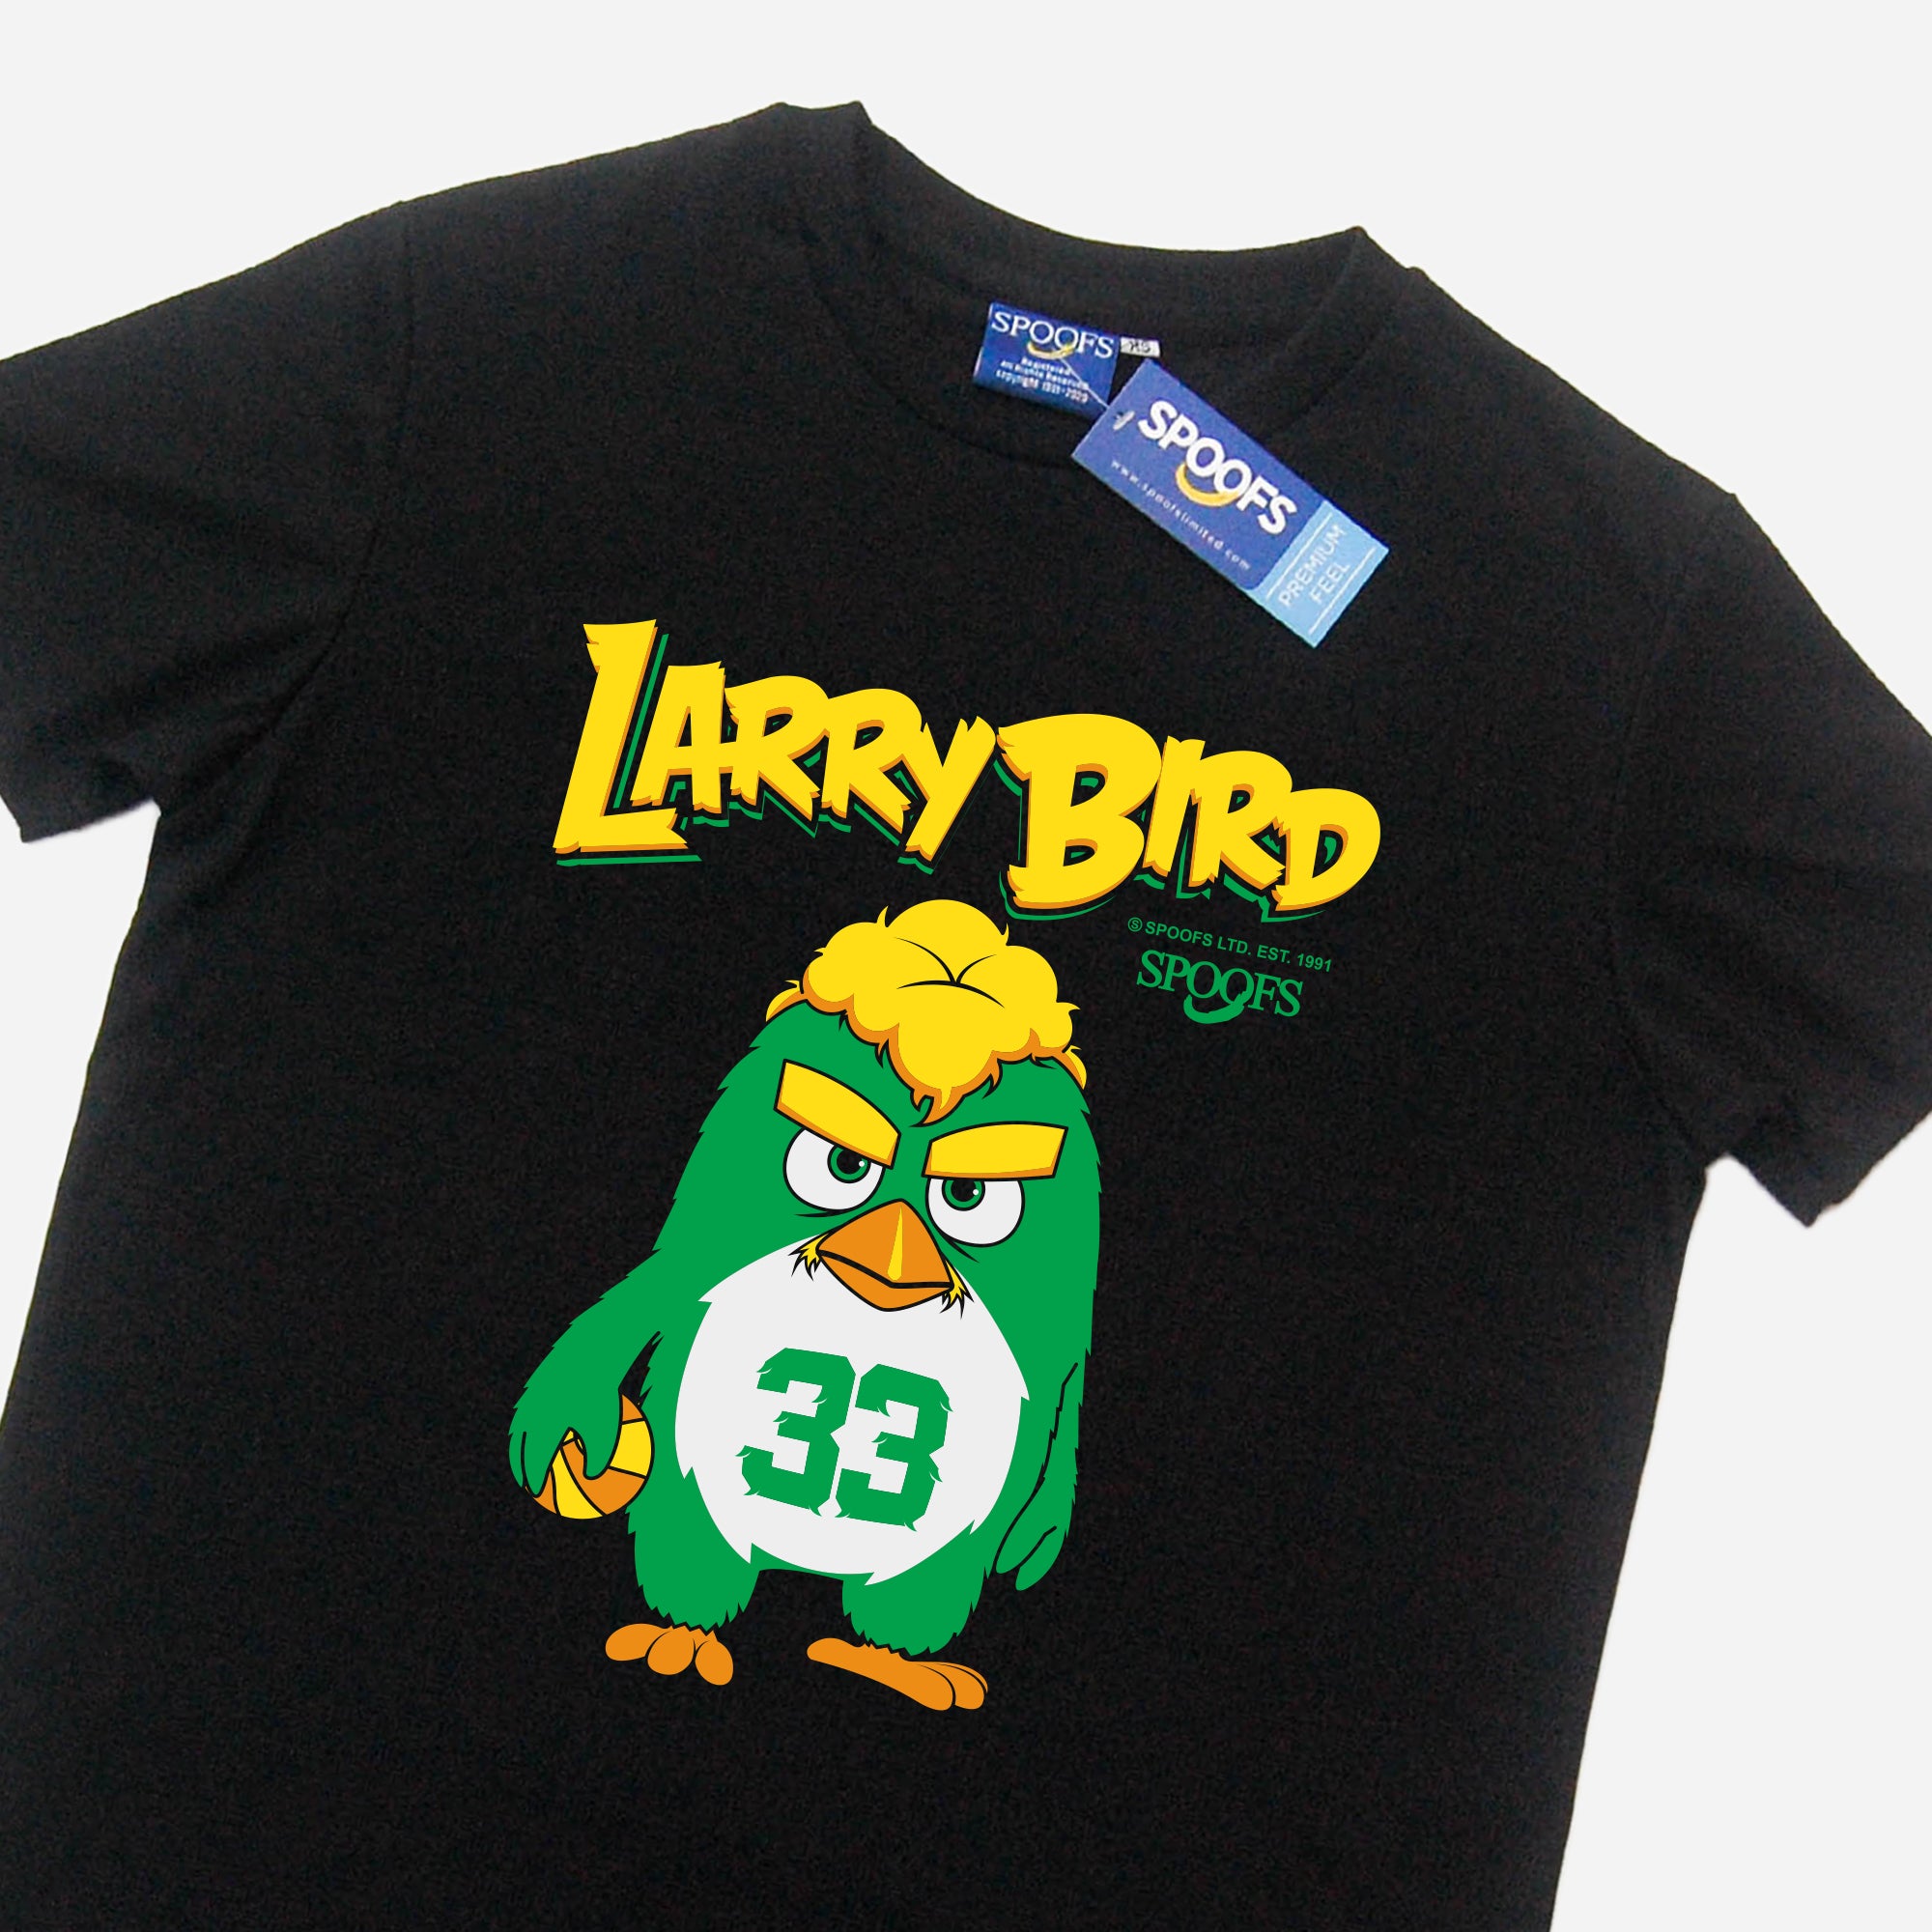 Re-issue Larry Bird (Black)